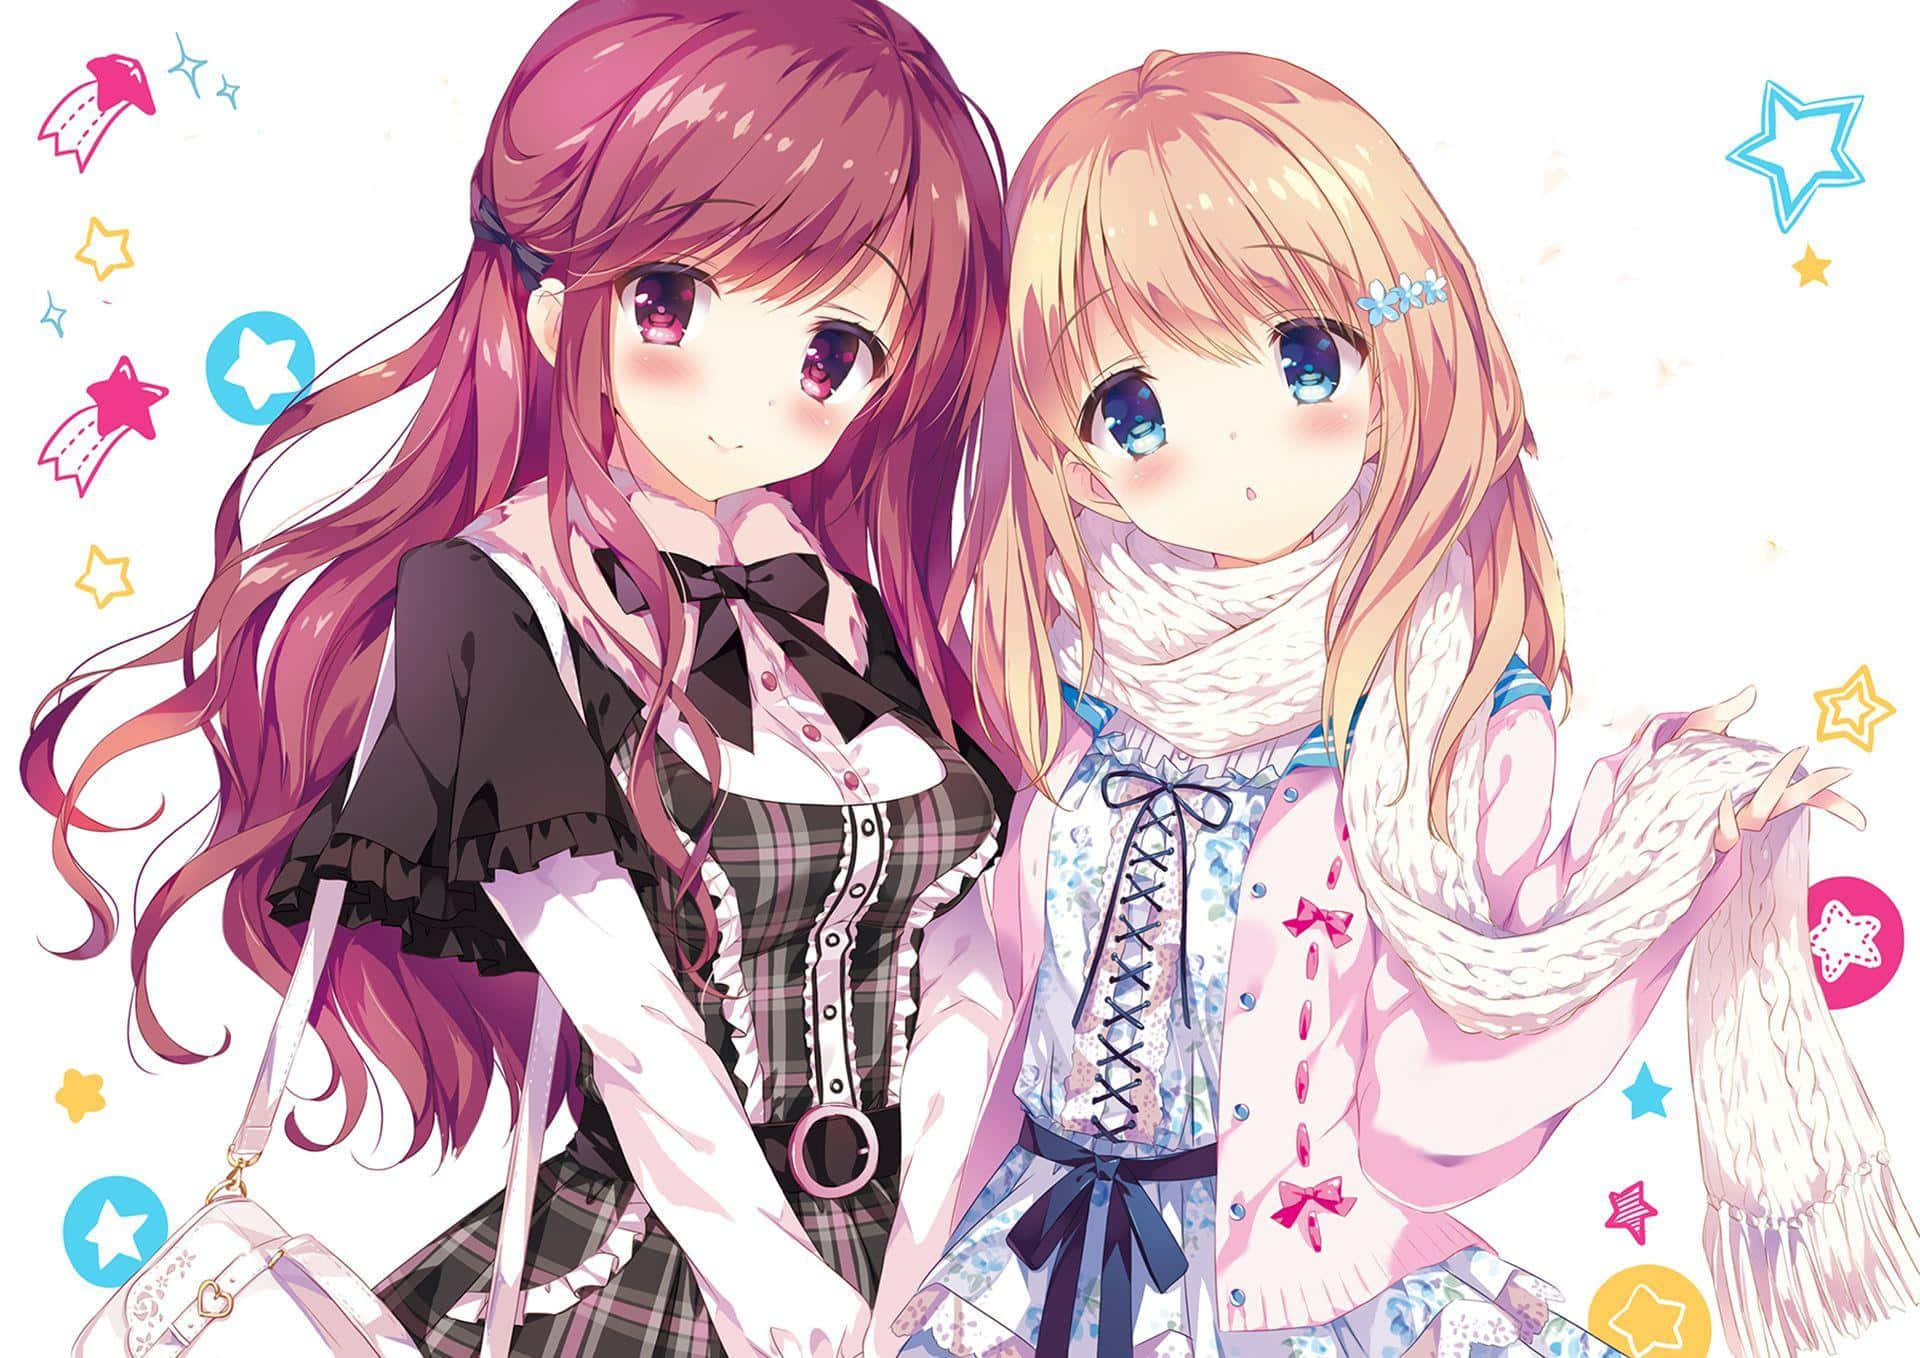 Kawaii Girl  Other  Anime Background Wallpapers on Desktop Nexus Image  2101046